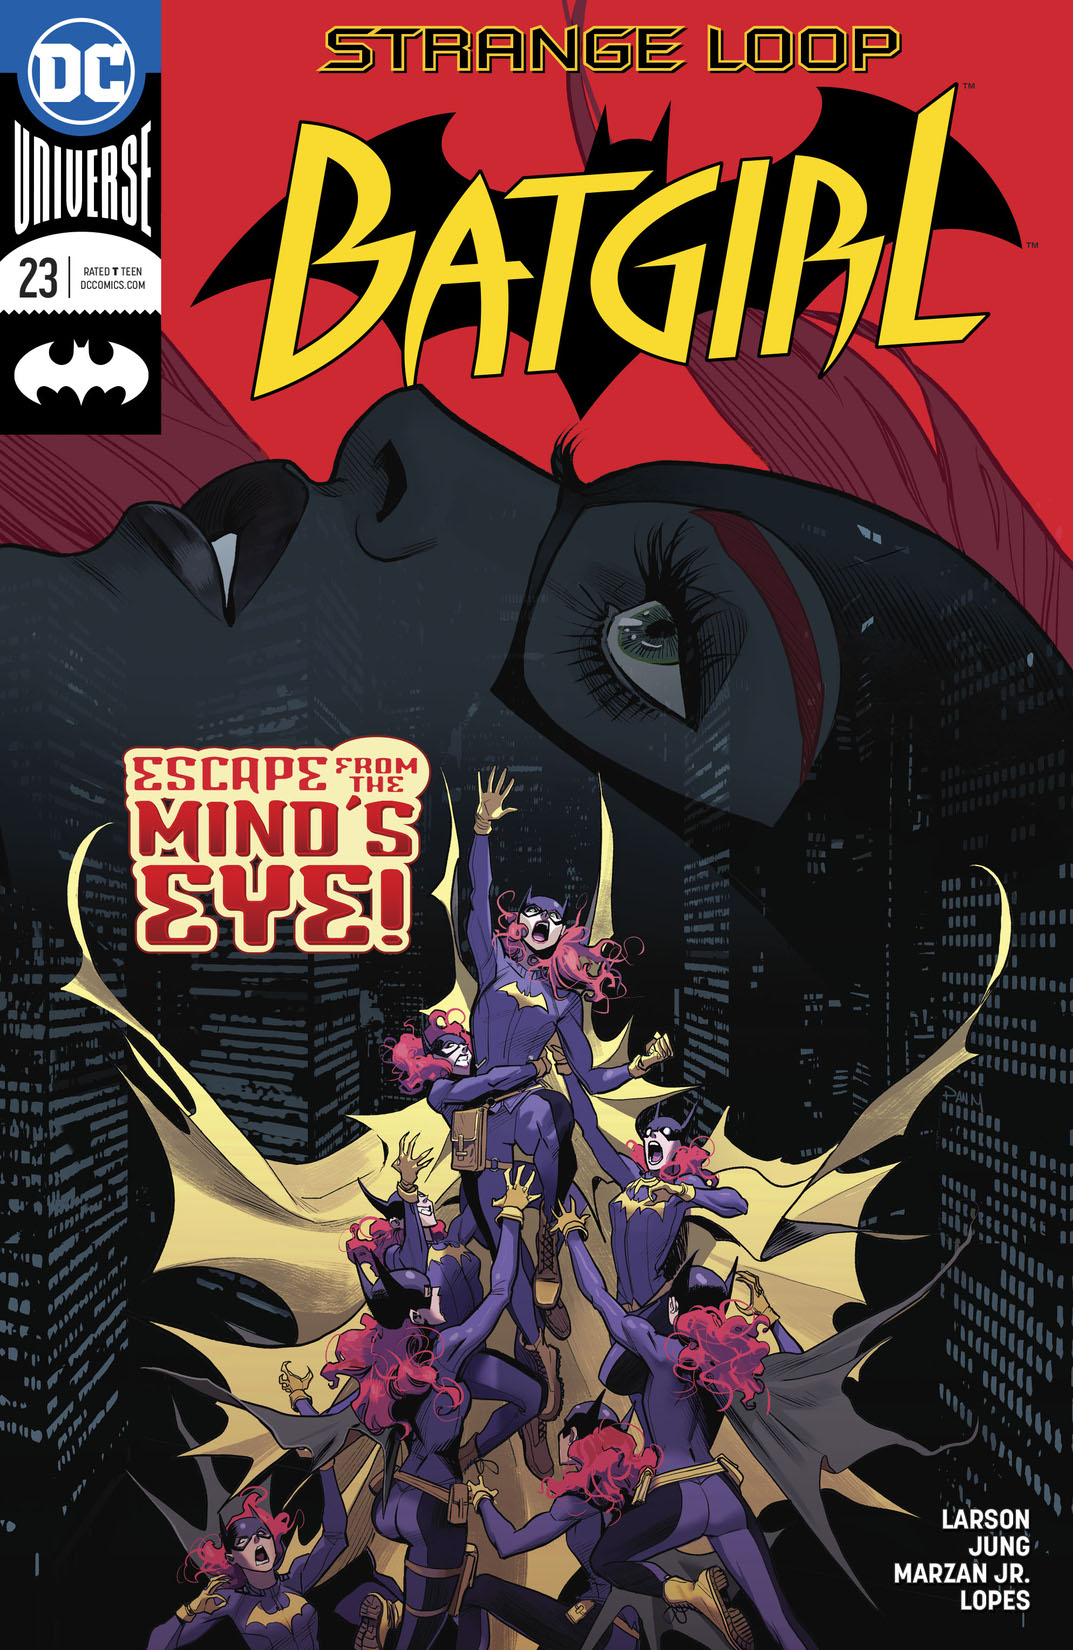 Batgirl (2016-) #23 preview images